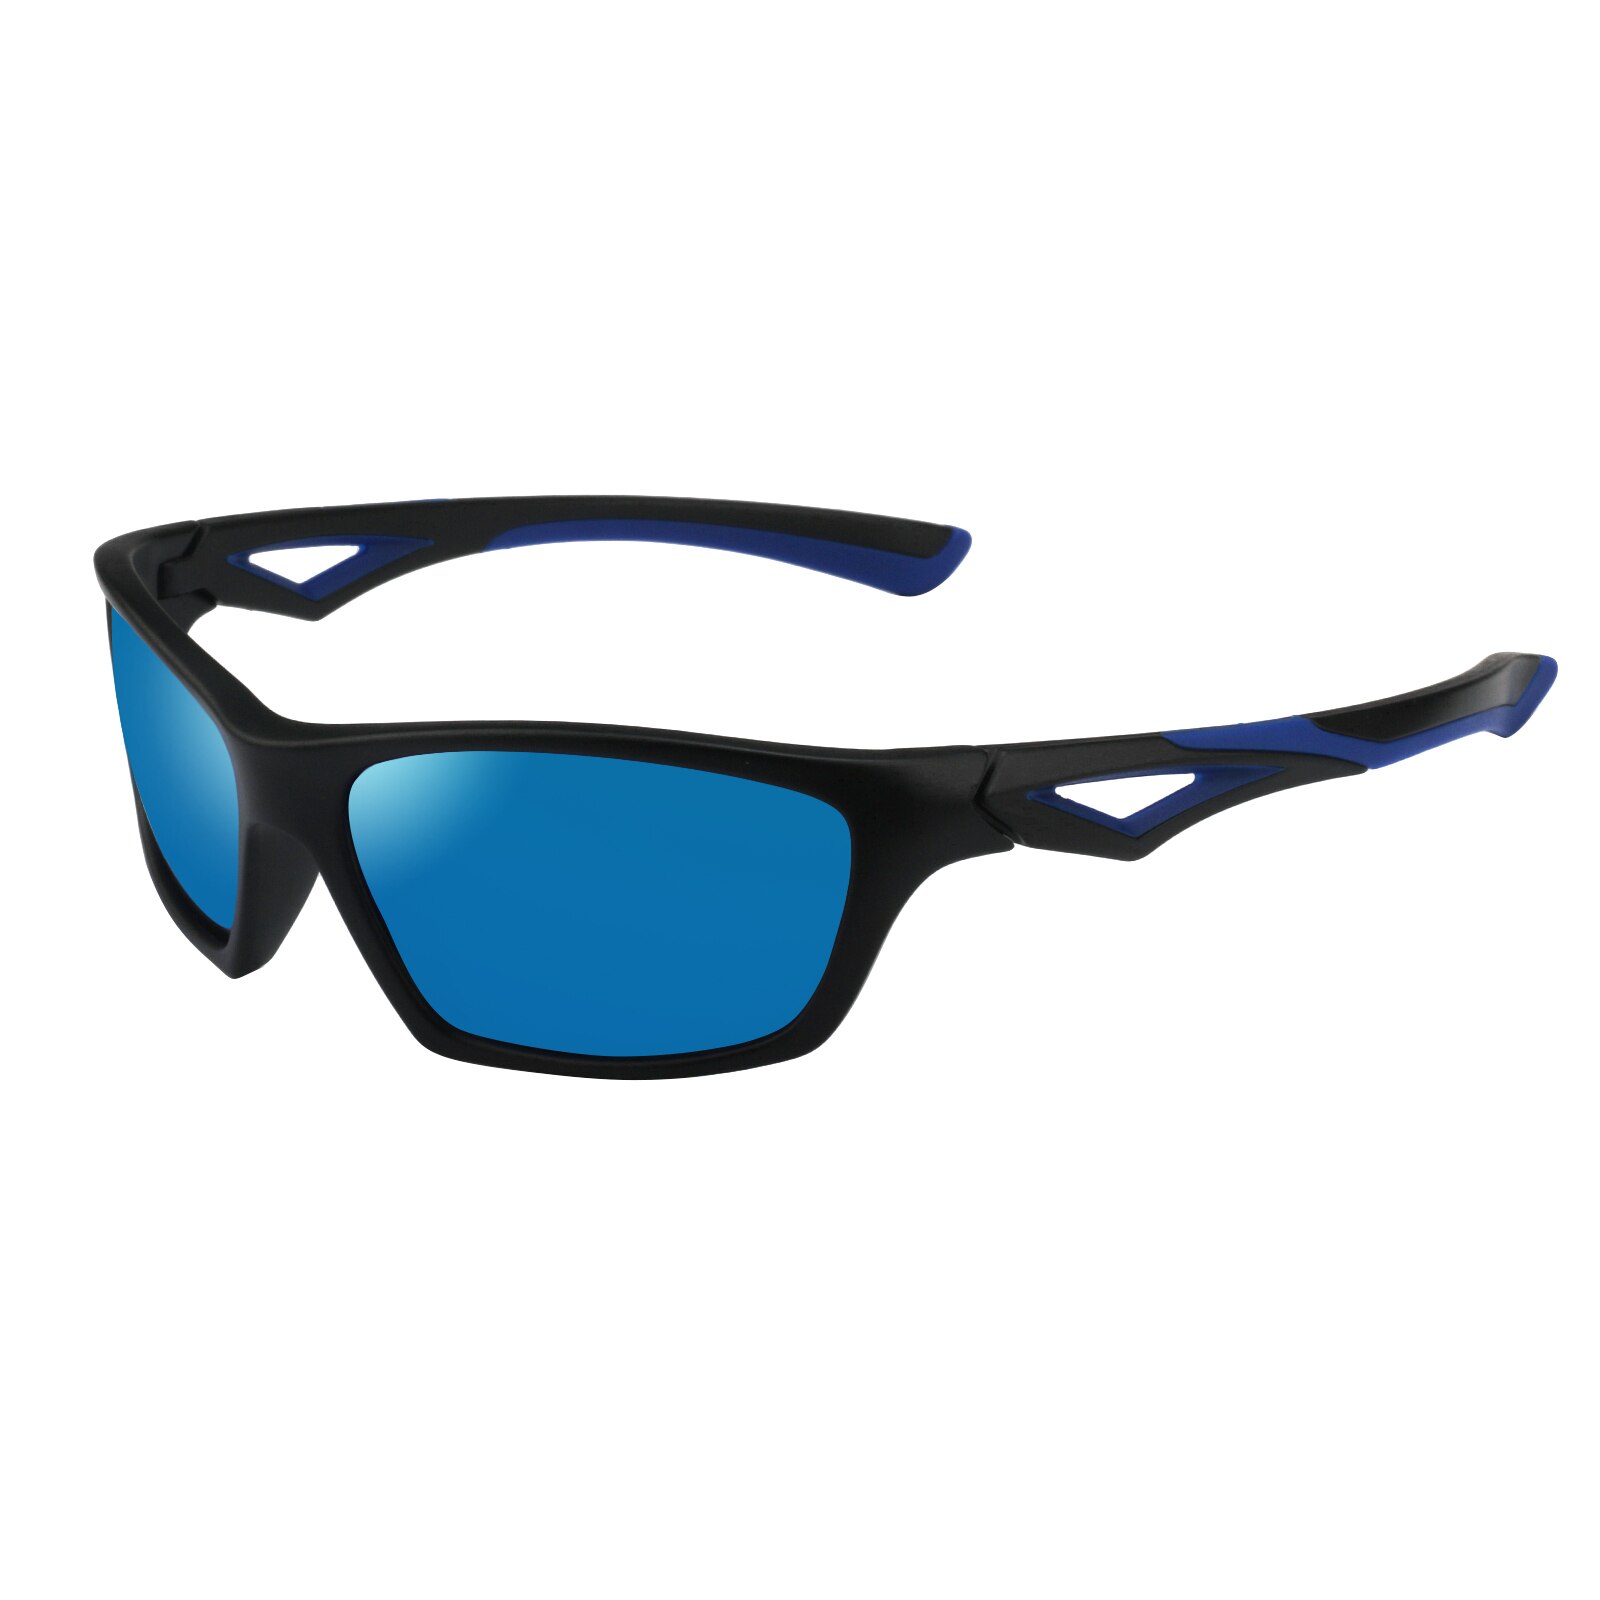 Kids Polarized Sunglasses TR90 Unbreakable Flexible Sport Glasses UV Protection for Boys Girls Age 3-10 Child Eyewear UV400: Black Blue l Blue